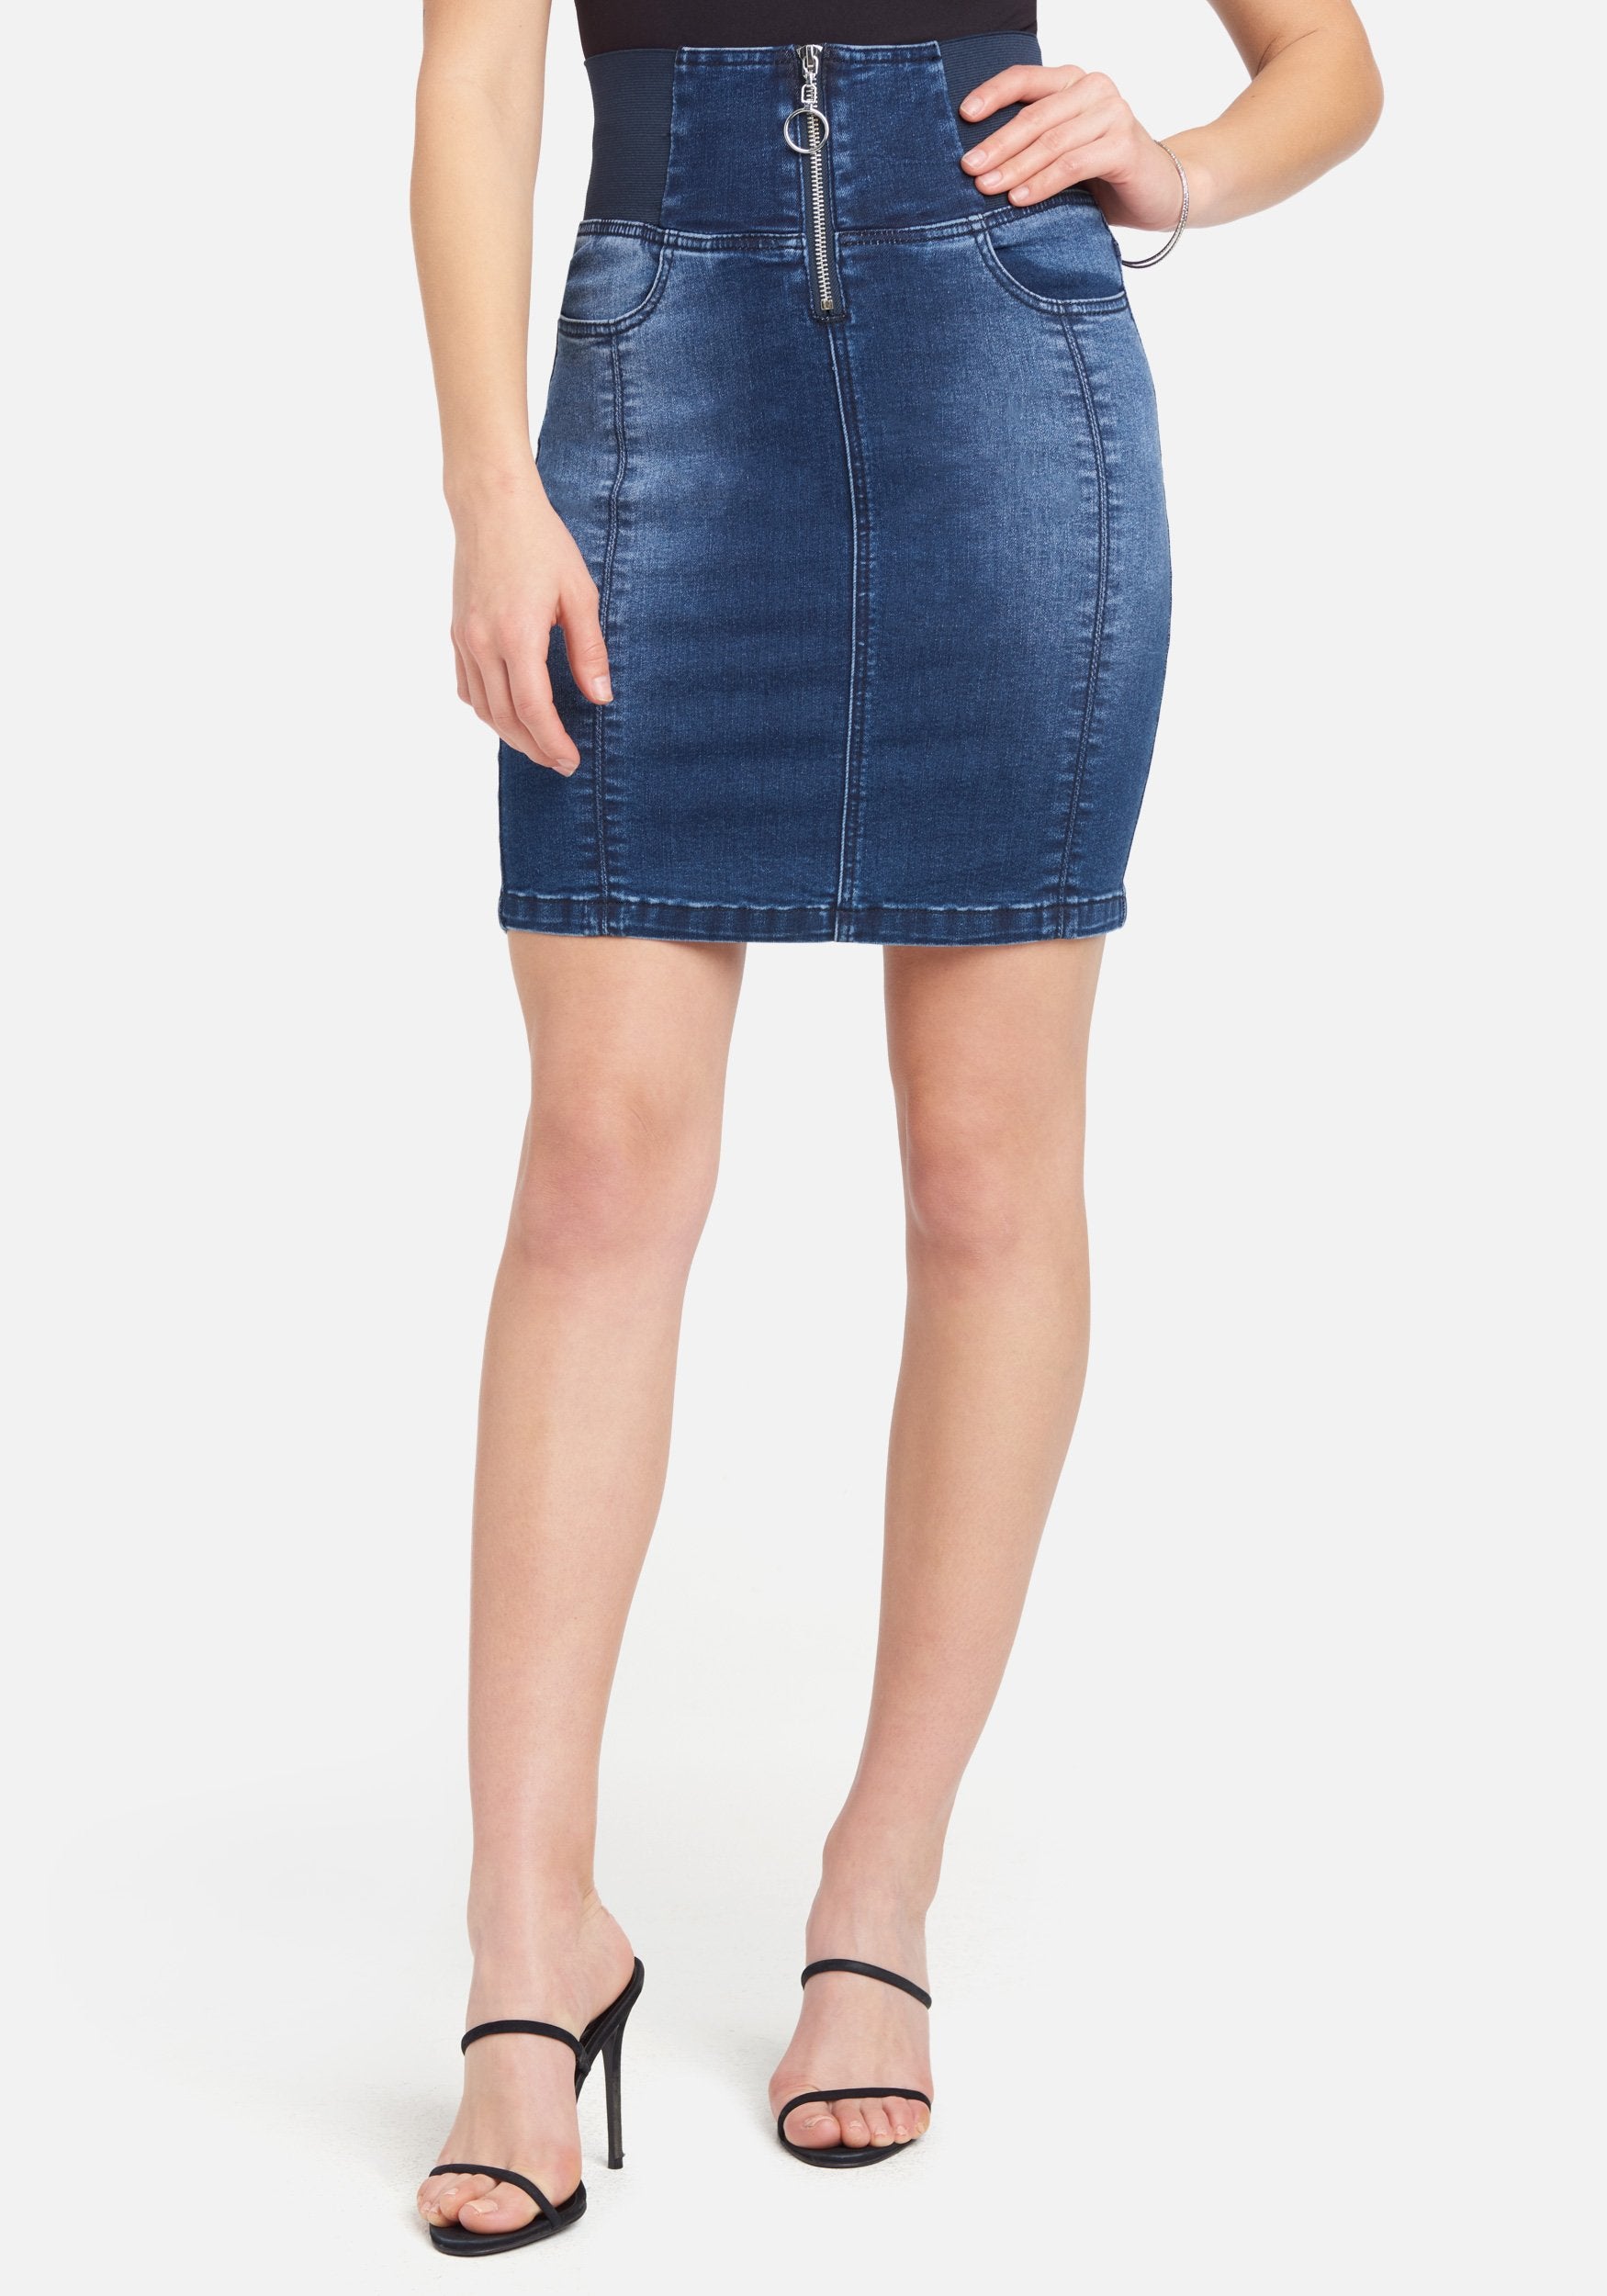 Bebe Women's Elastic High Waist Jean Skirt, Size 26 in Med Indigo Wash Cotton/Spandex